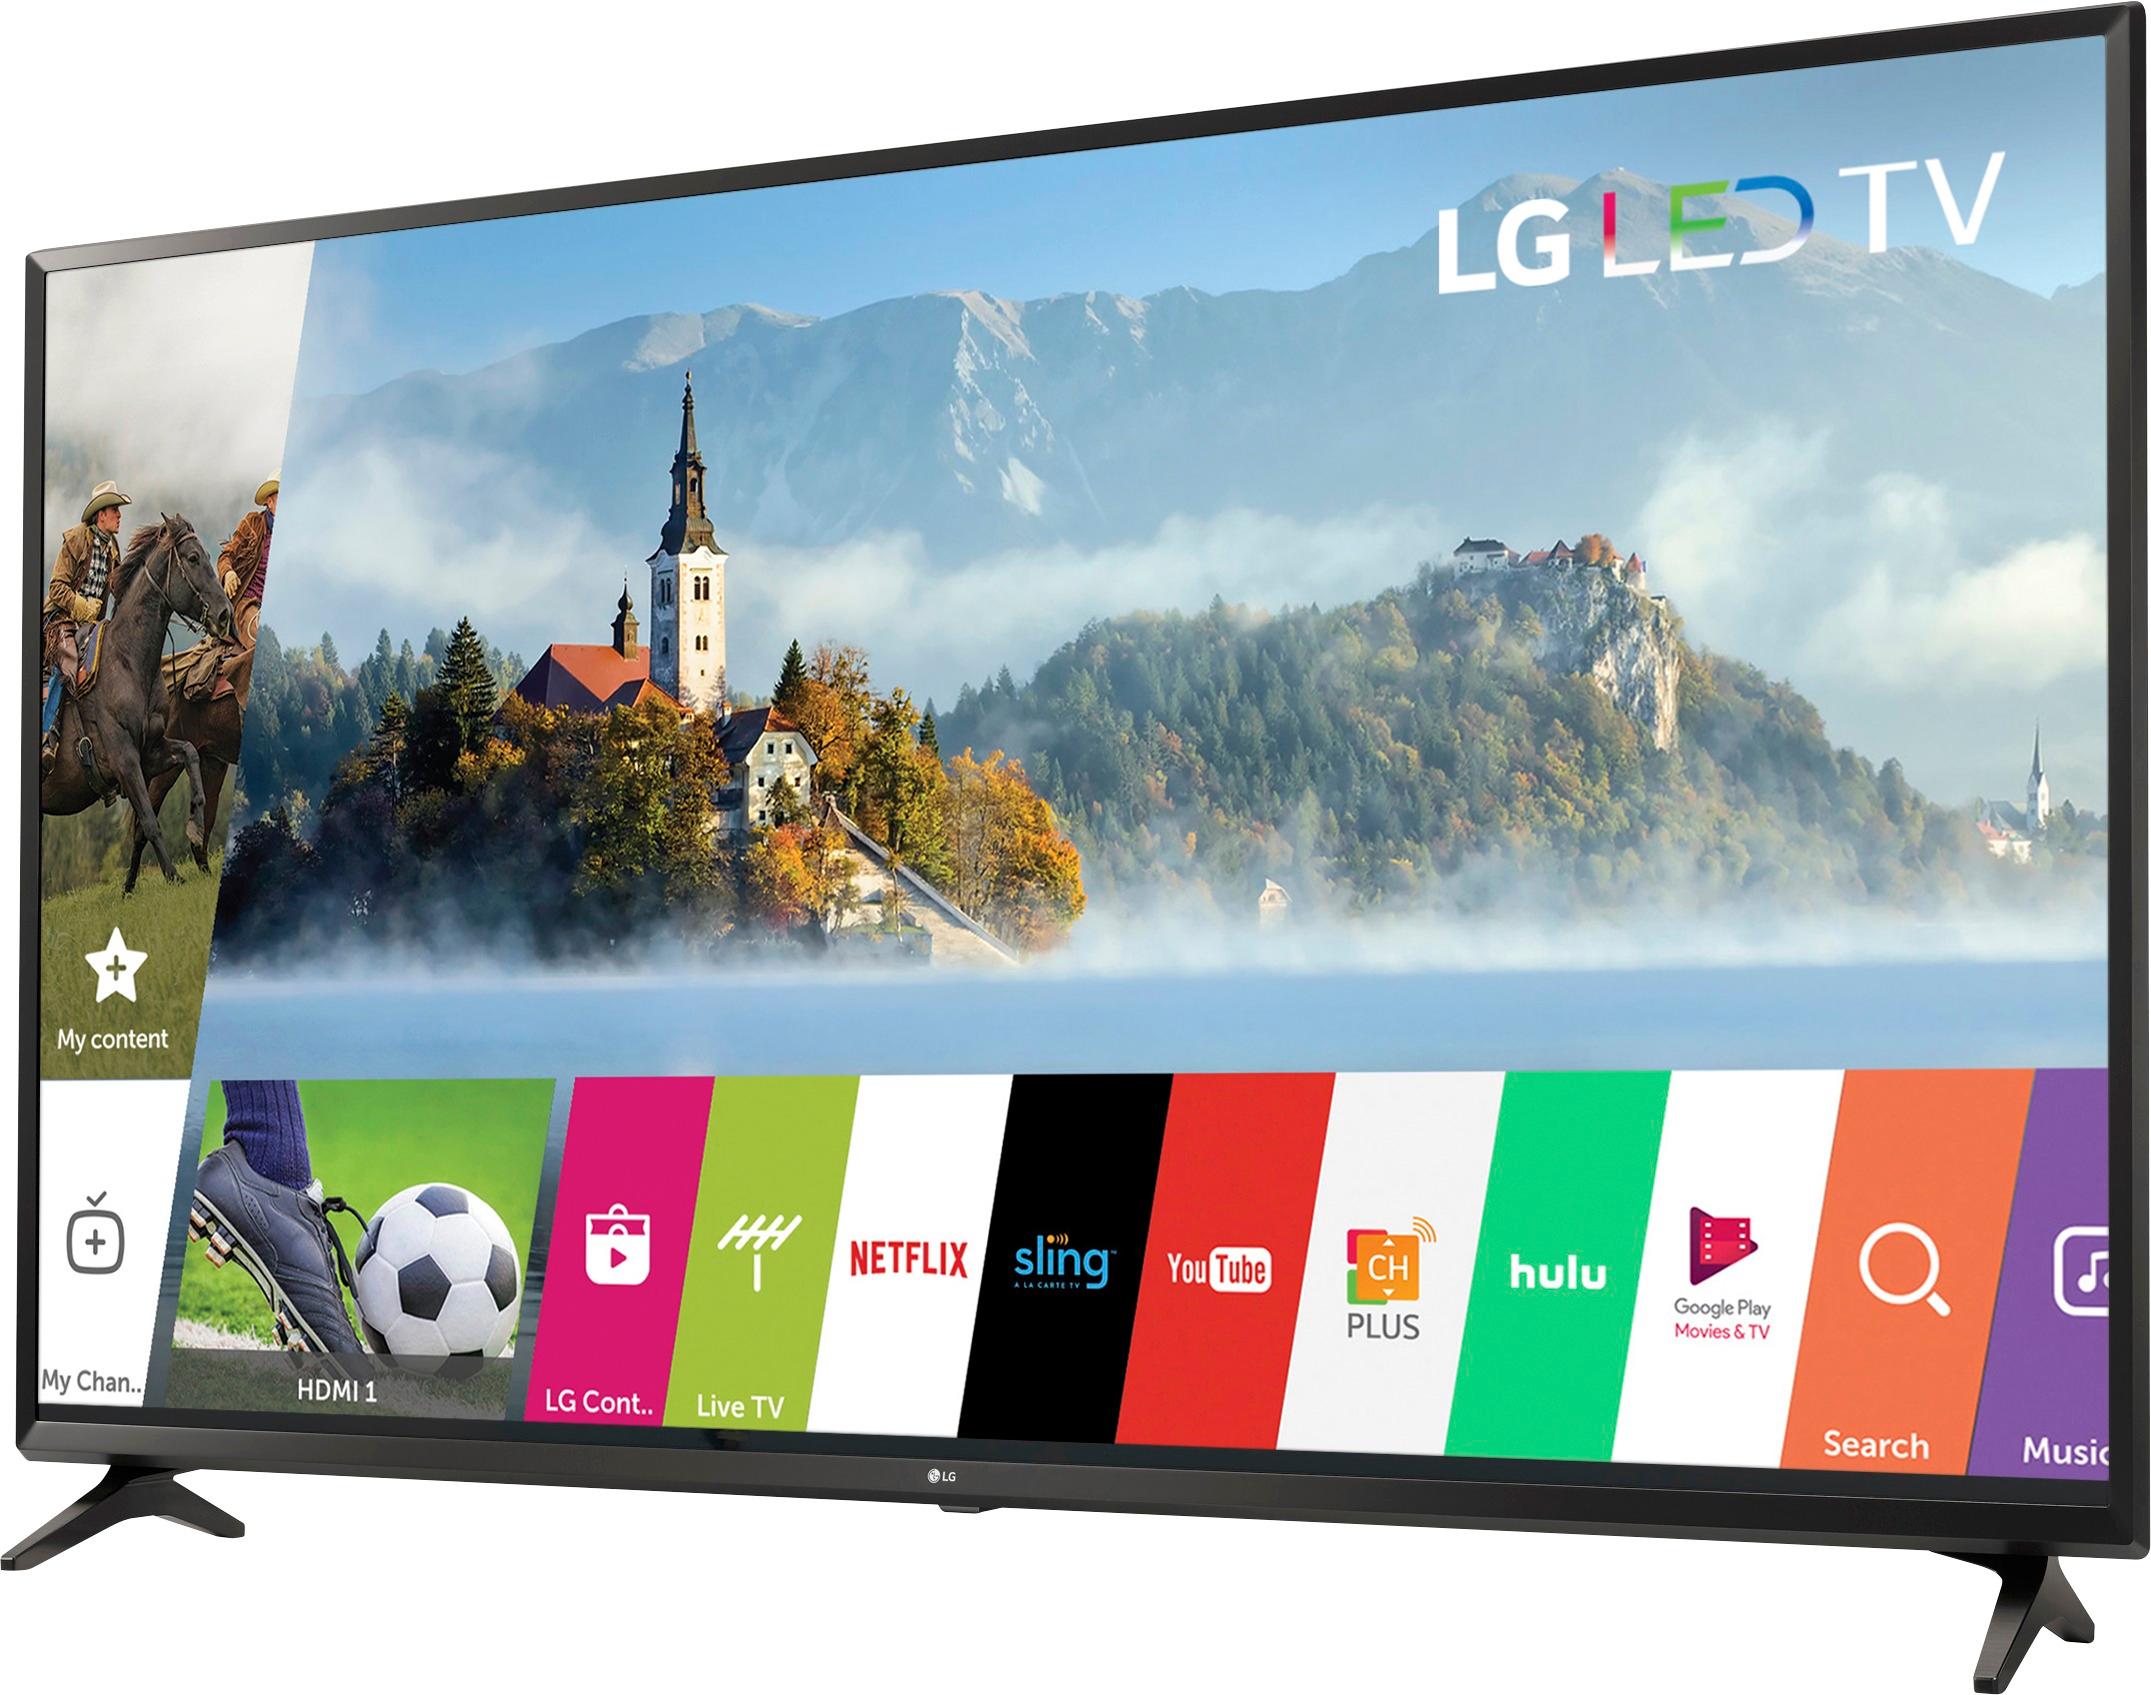 Best Buy: LG 65 Class LED UJ6300 Series 2160p Smart 4K UHD TV